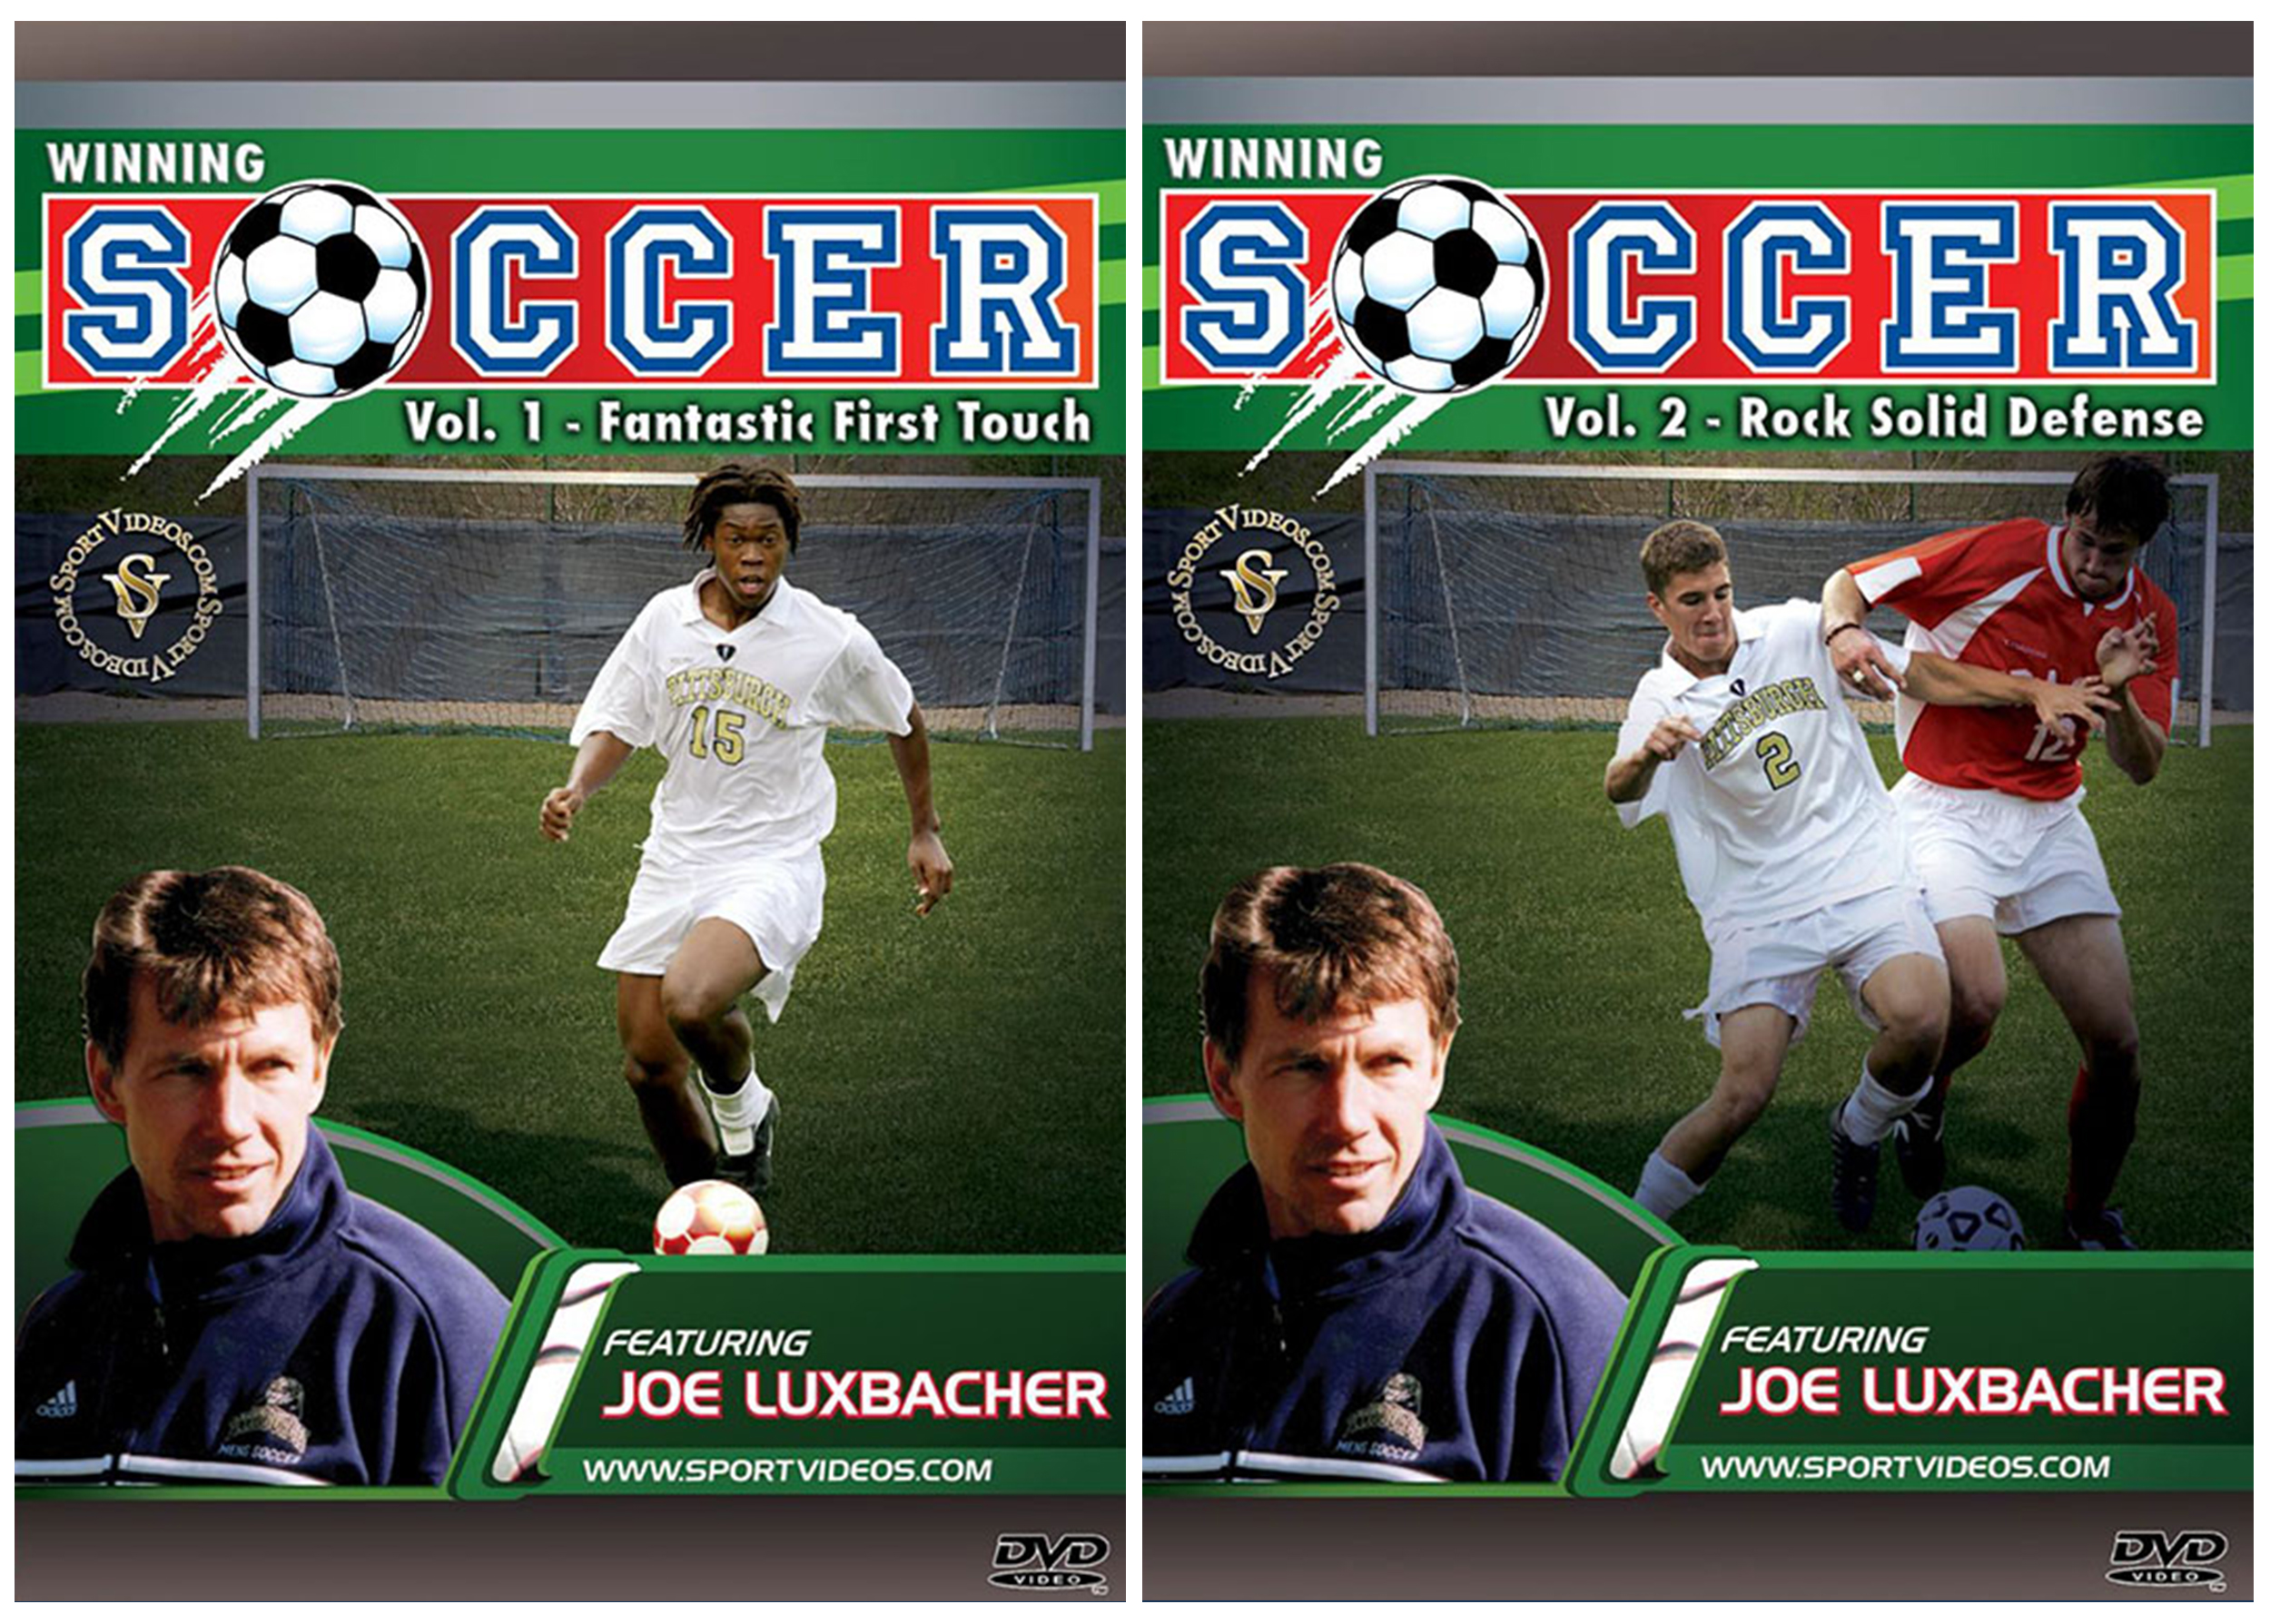 Winning Soccer Vol 1 & Vol 2 DVD Set